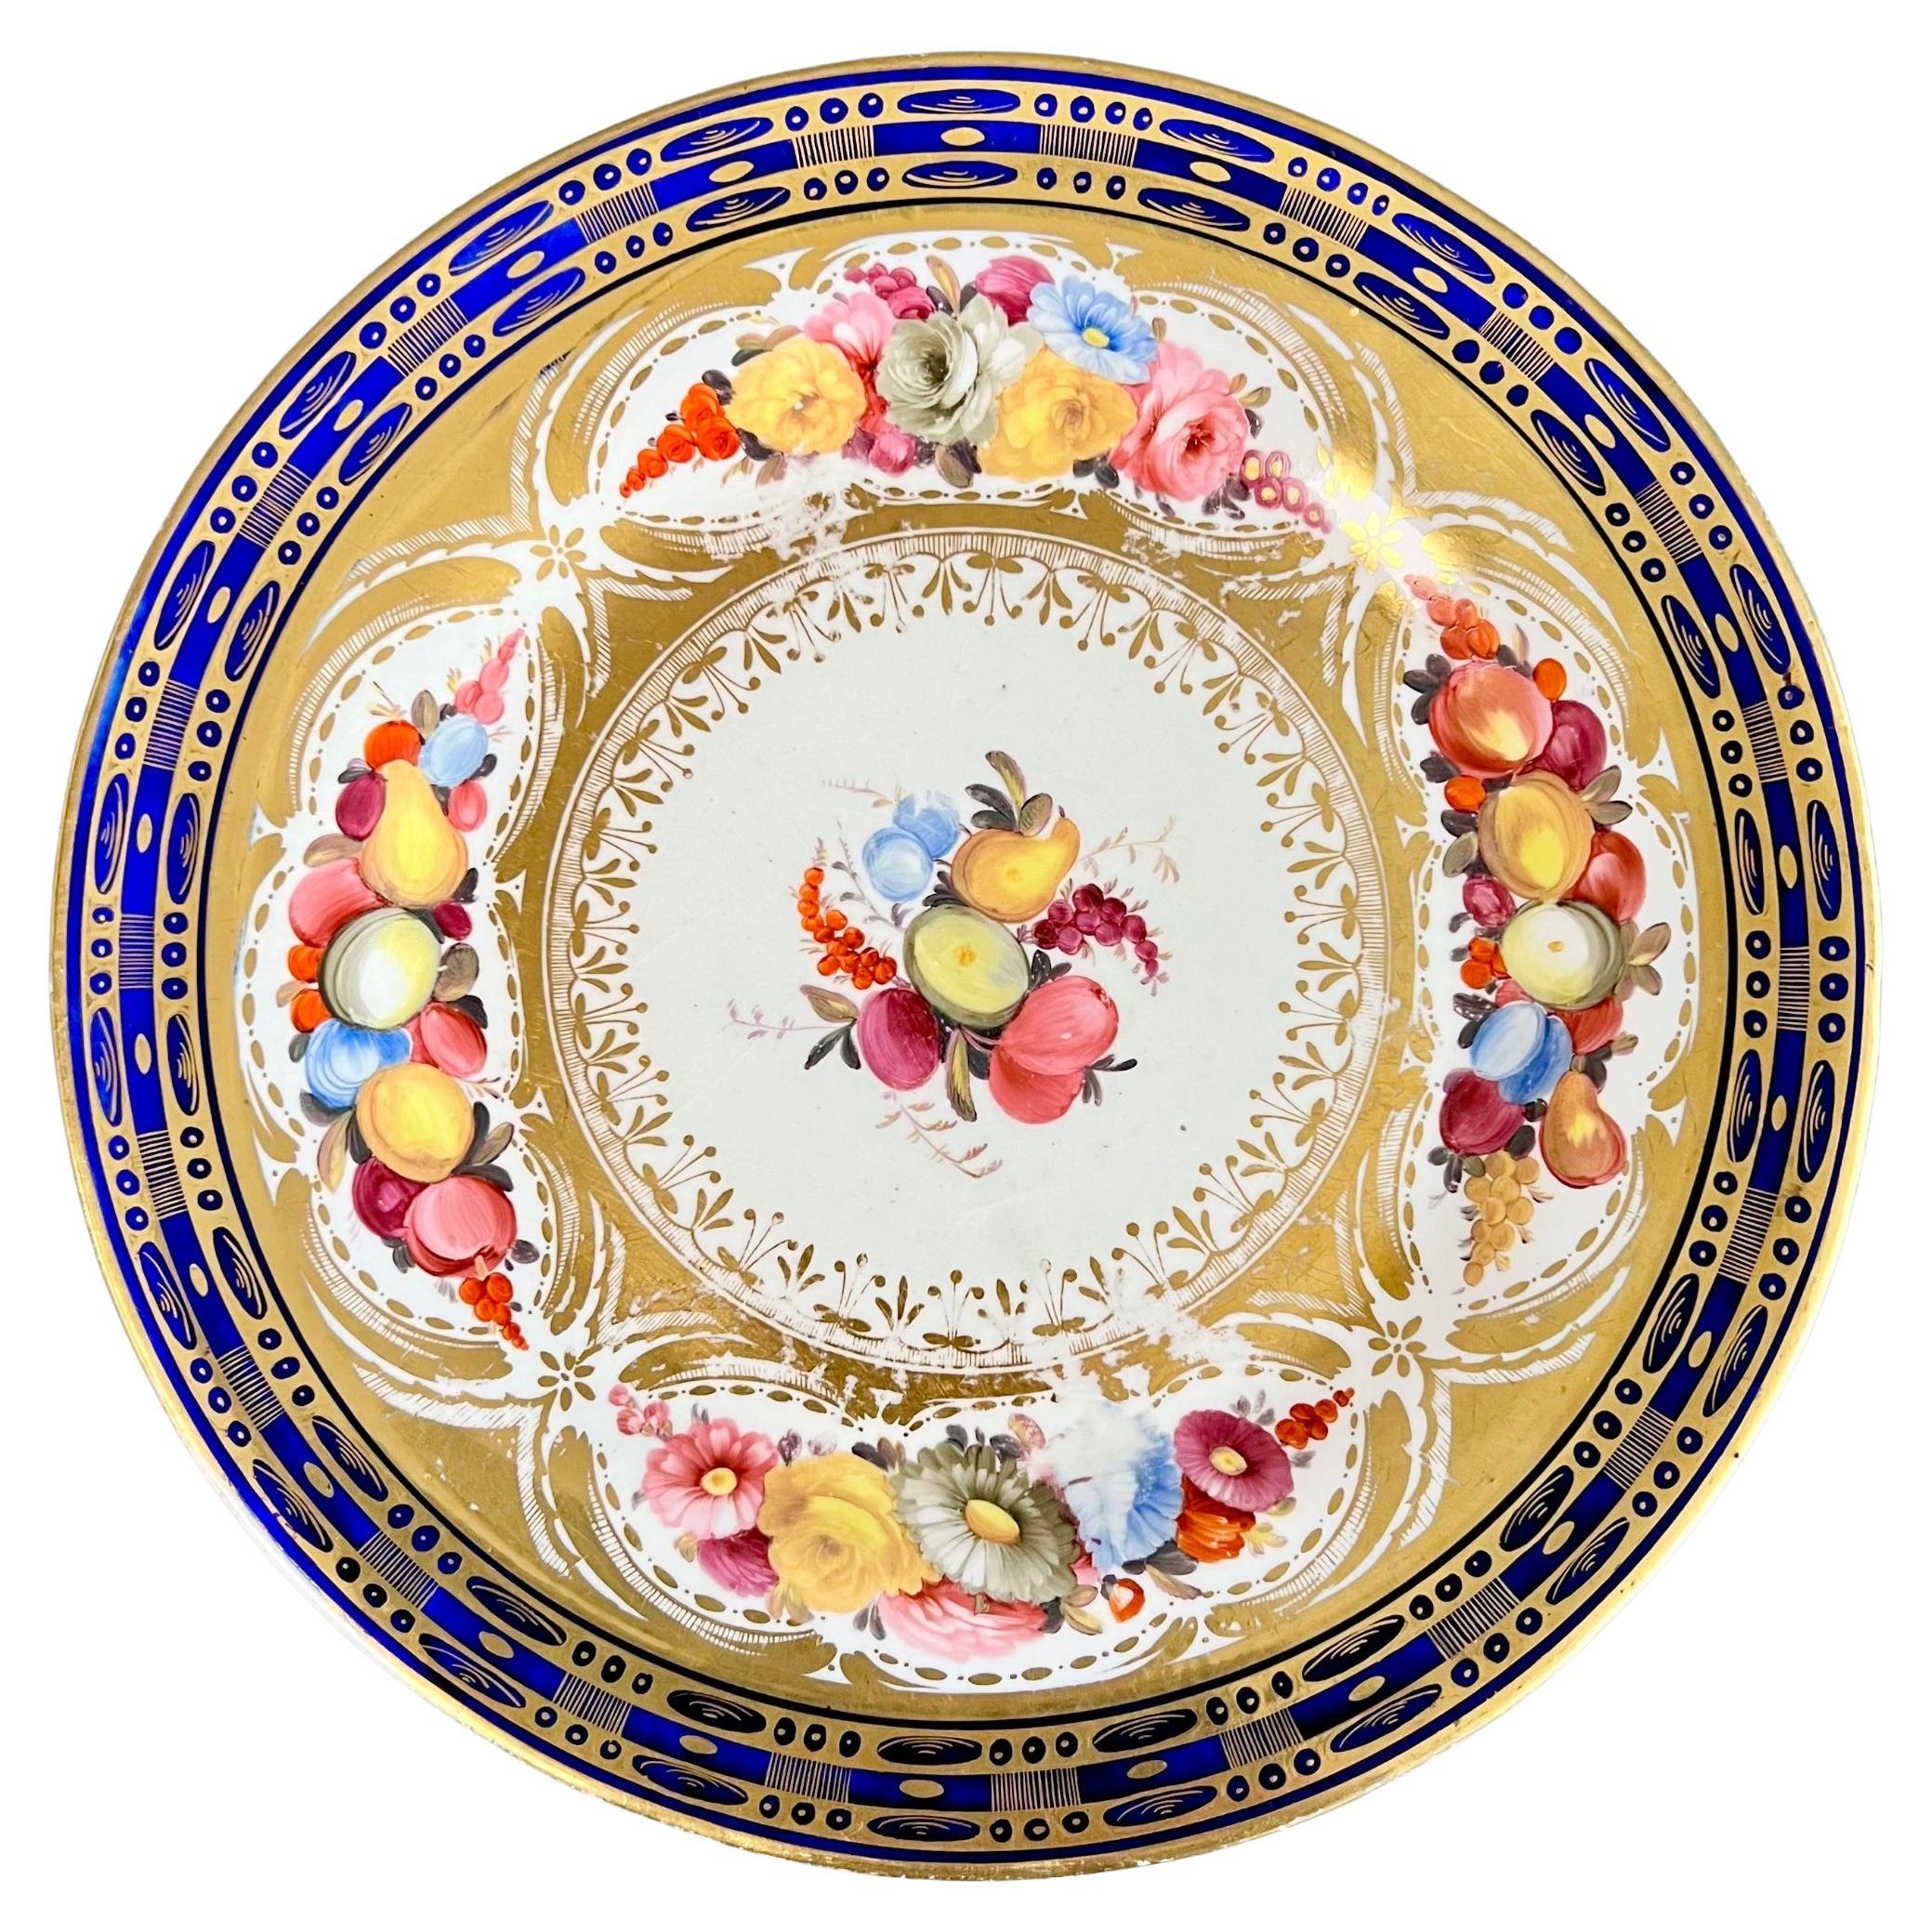 Coalport John Rose Porcelain Plate, Cobalt Blue, Gilt, Flowers & Fruits, 1805-15